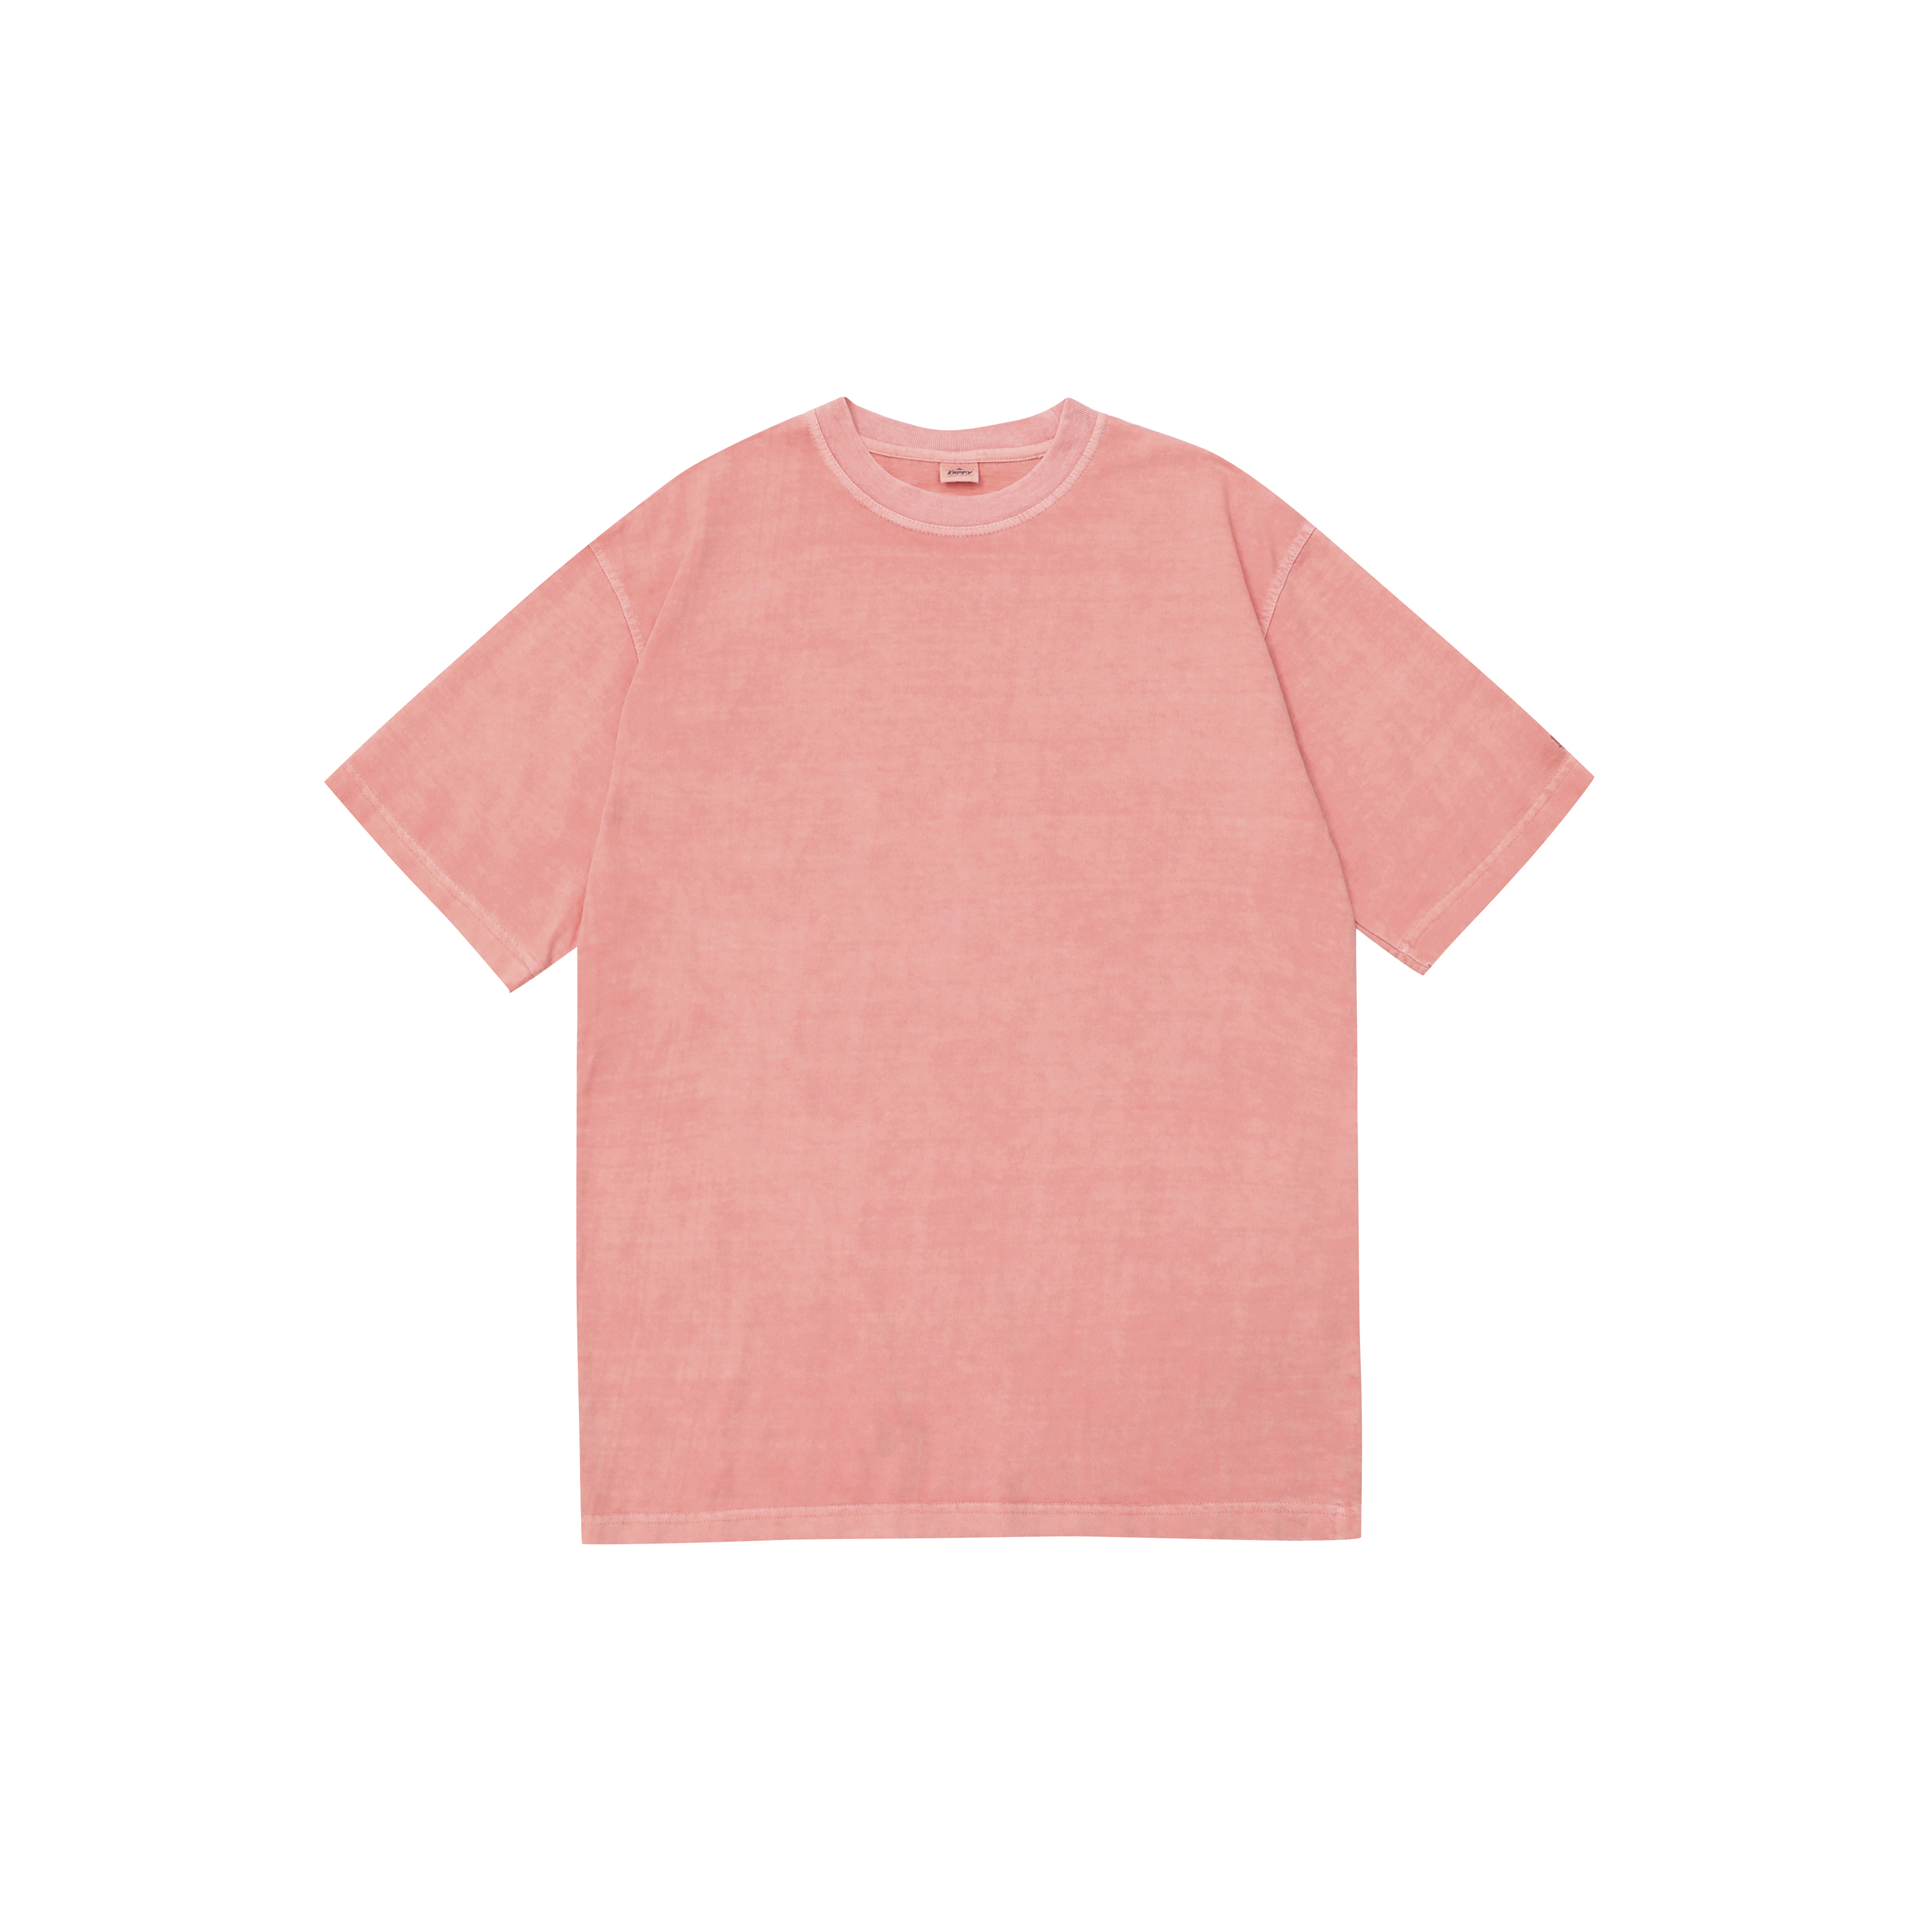 Pigment t-shirt pink